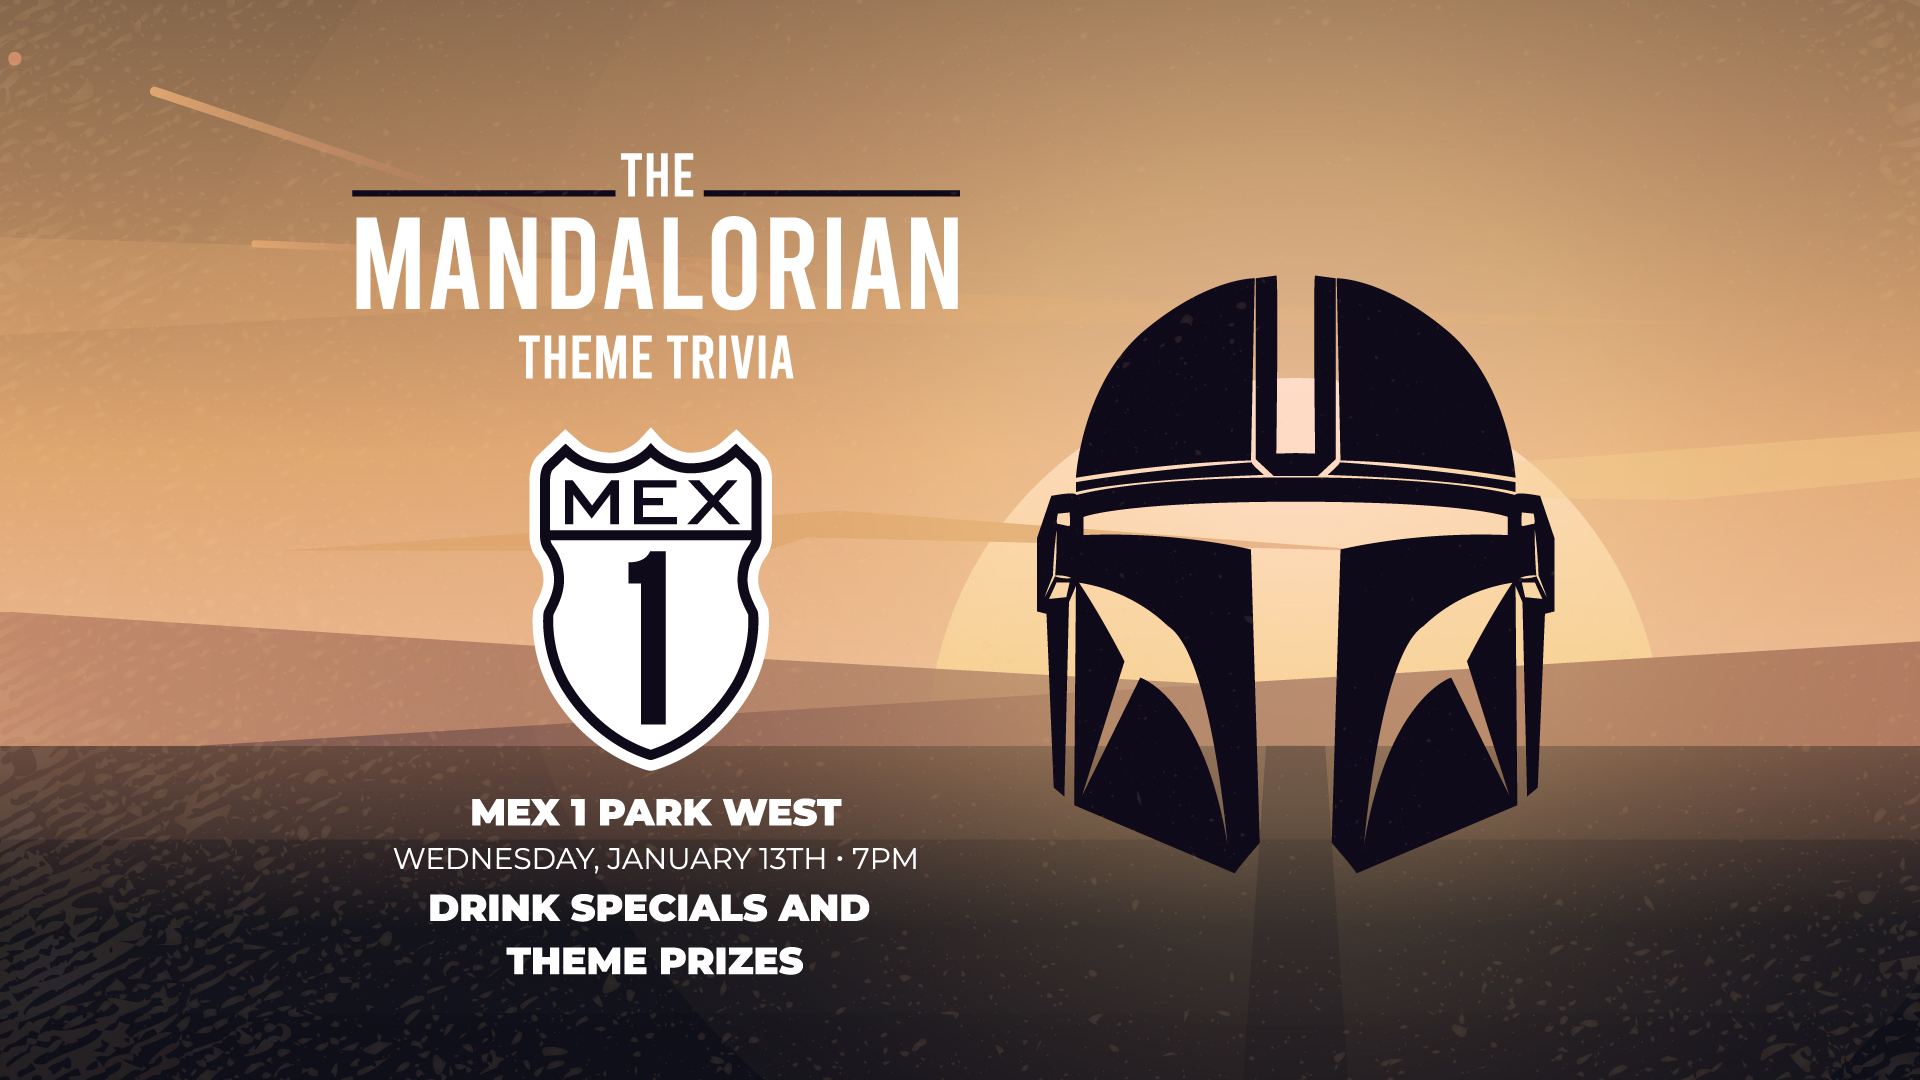 Mandalorian Theme Trivia at Mex 1 Park West